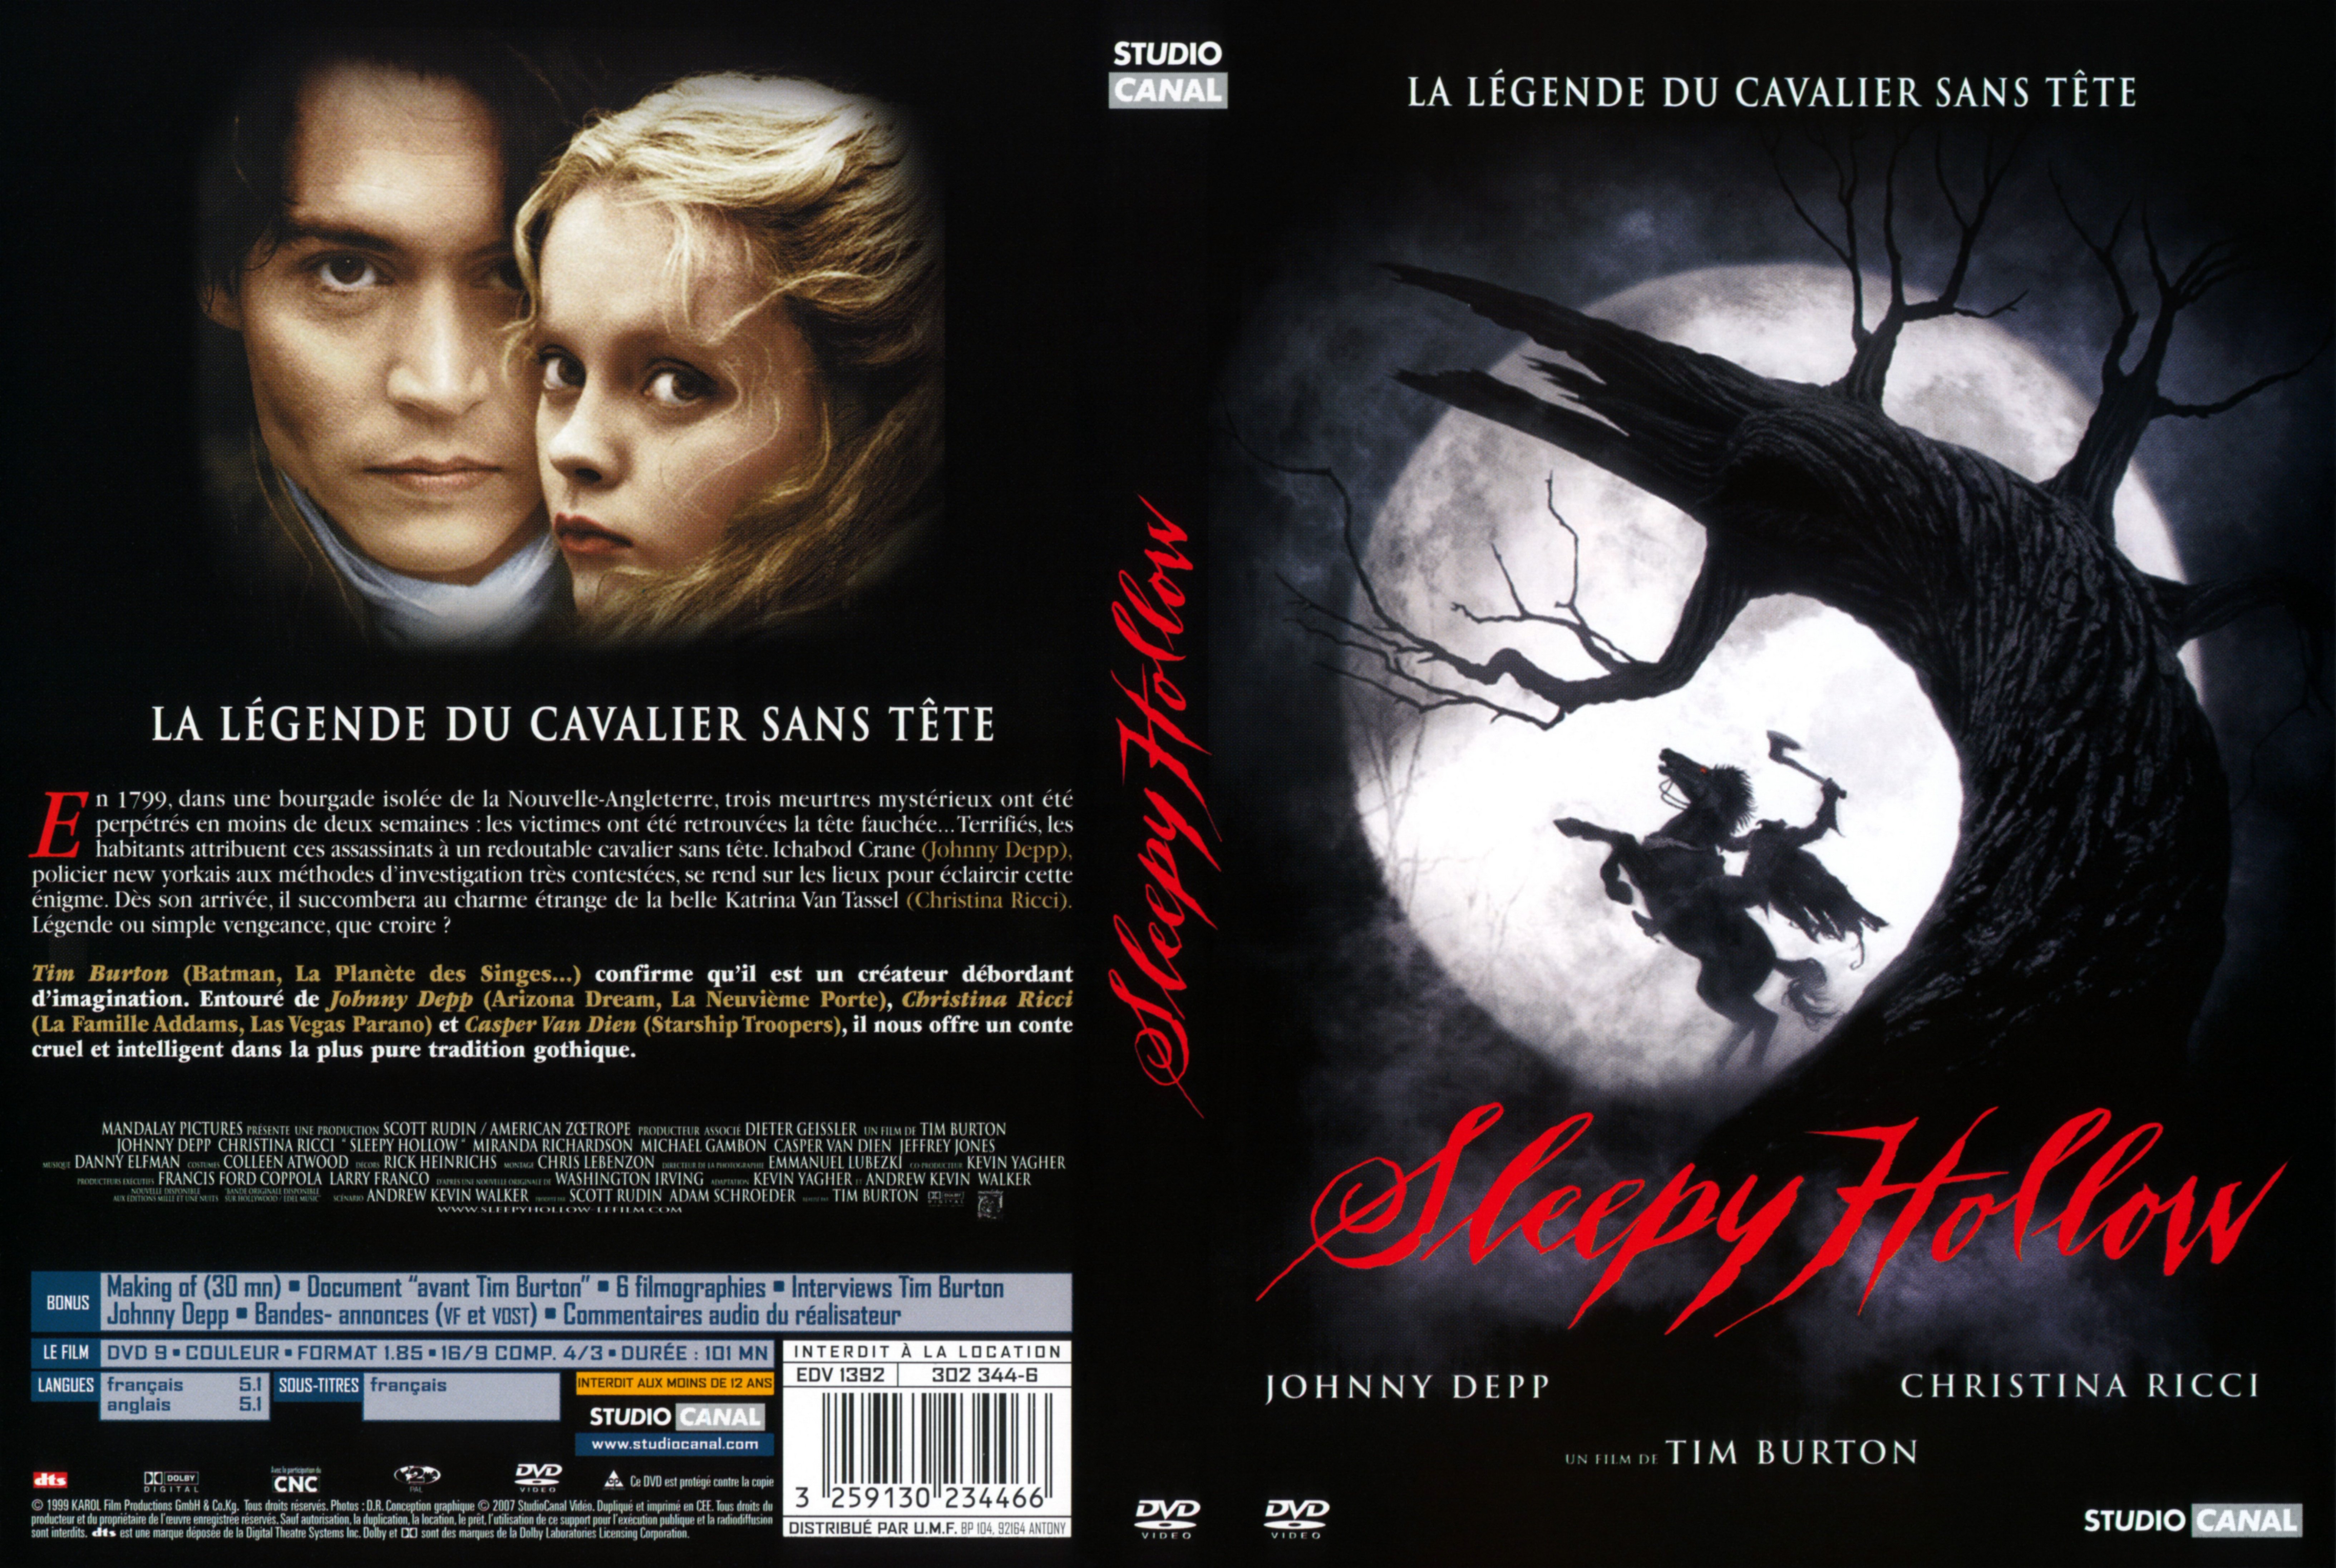 Jaquette DVD Sleepy hollow v2